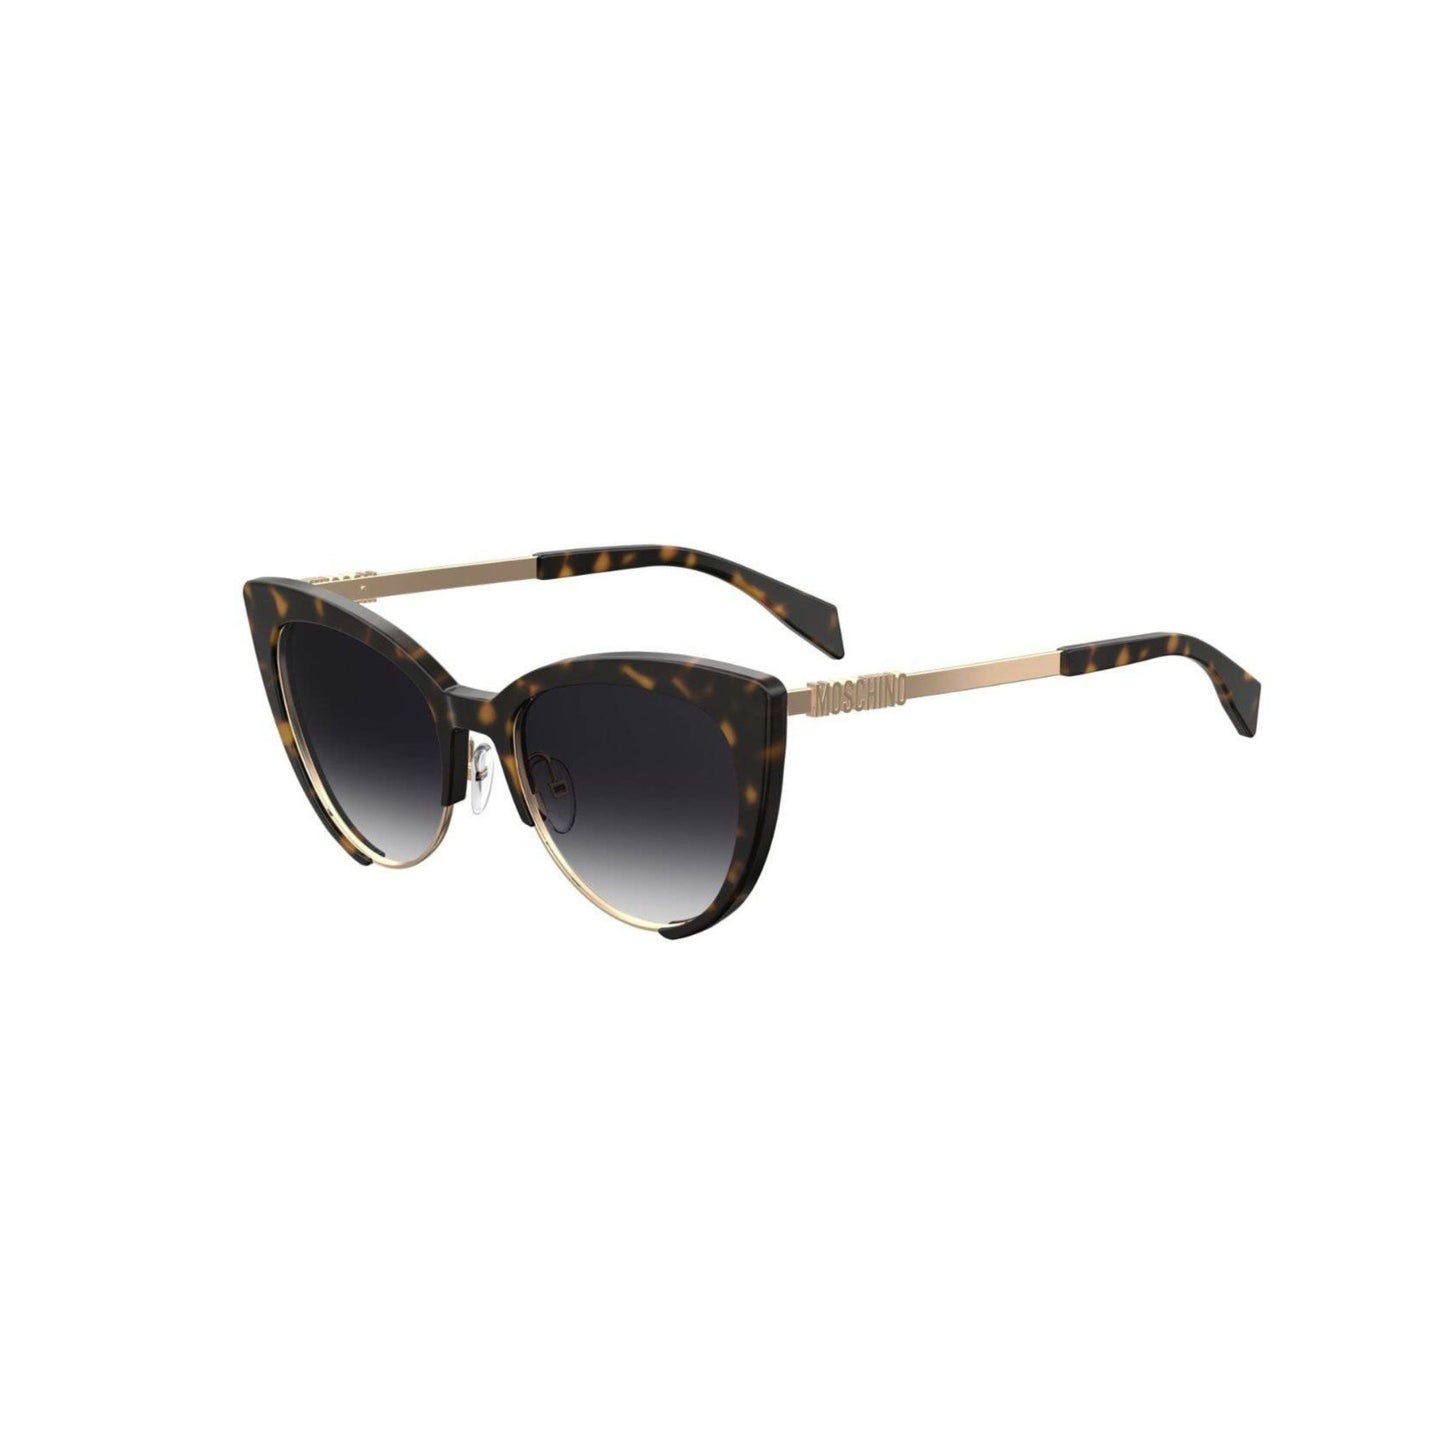 Moschino Women's Sunglasses MOS040/S 086/9O POLARIZED